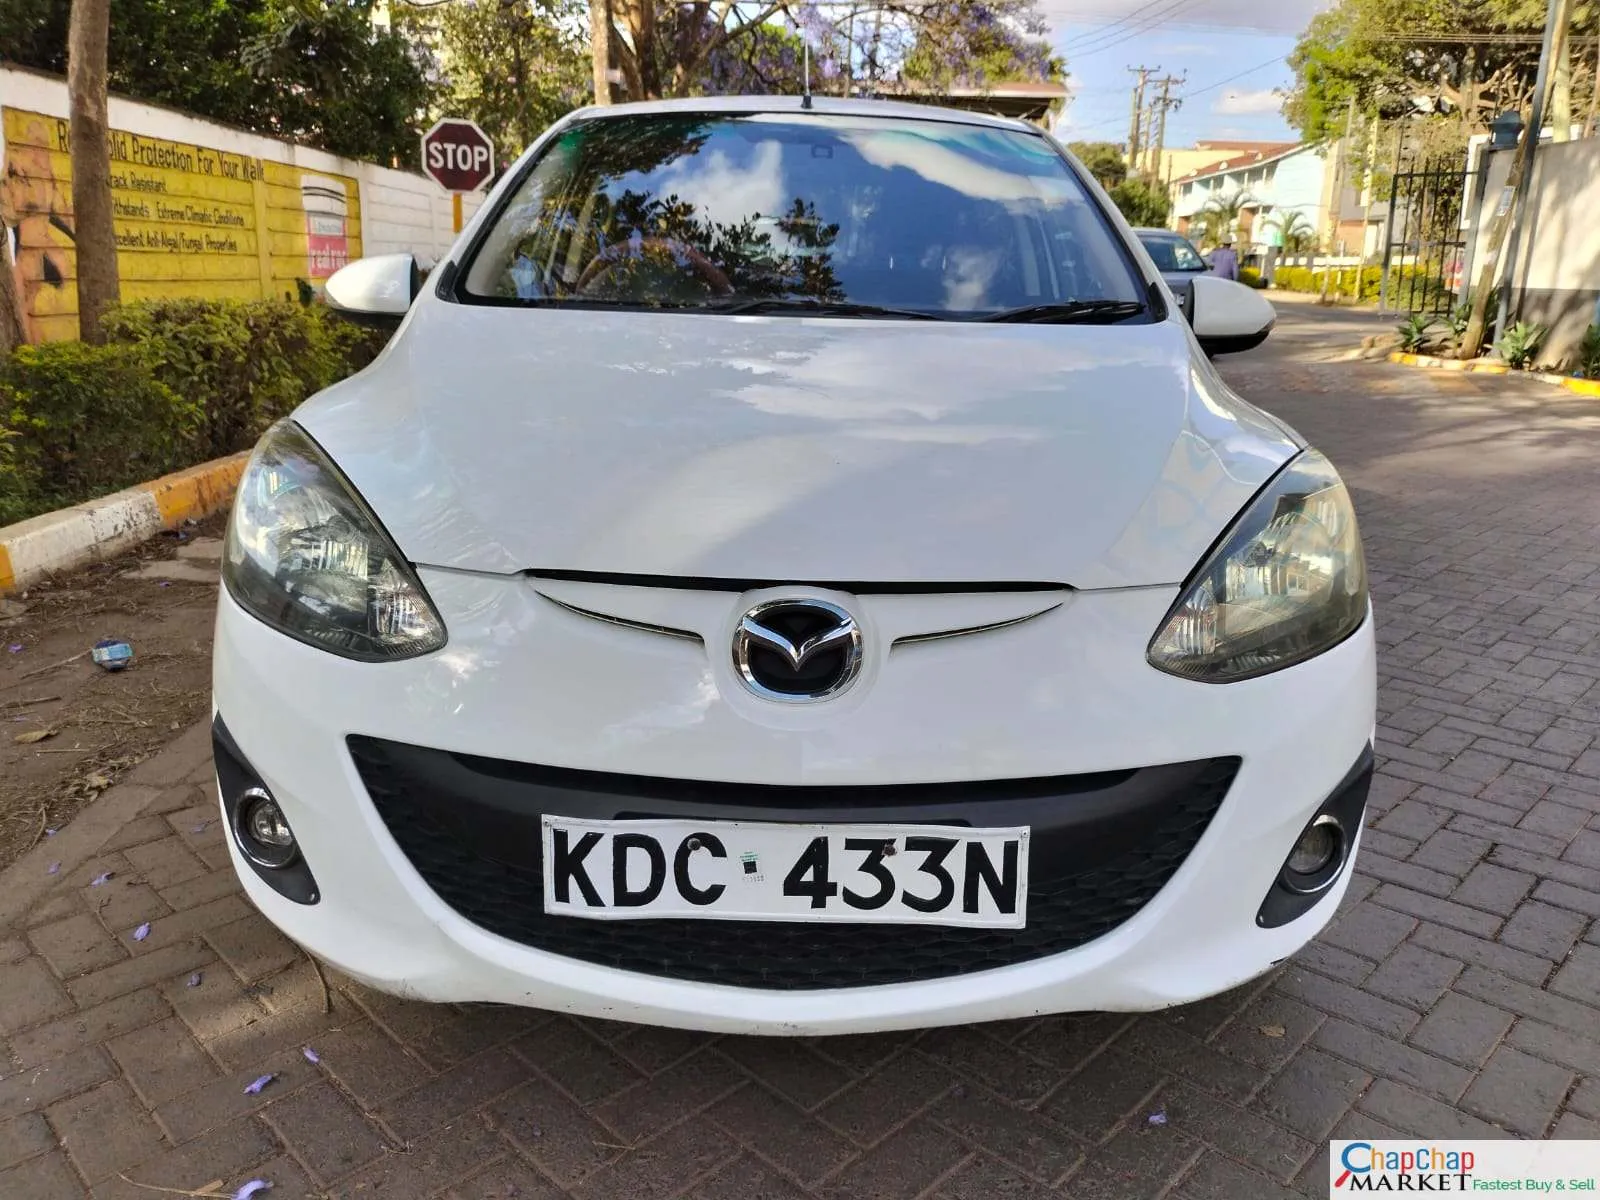 Mazda Demio kenya 🔥 You Pay 30% DEPOSIT TRADE IN OK Mazda demio for sale in kenya hire purchase installments EXCLUSIVE